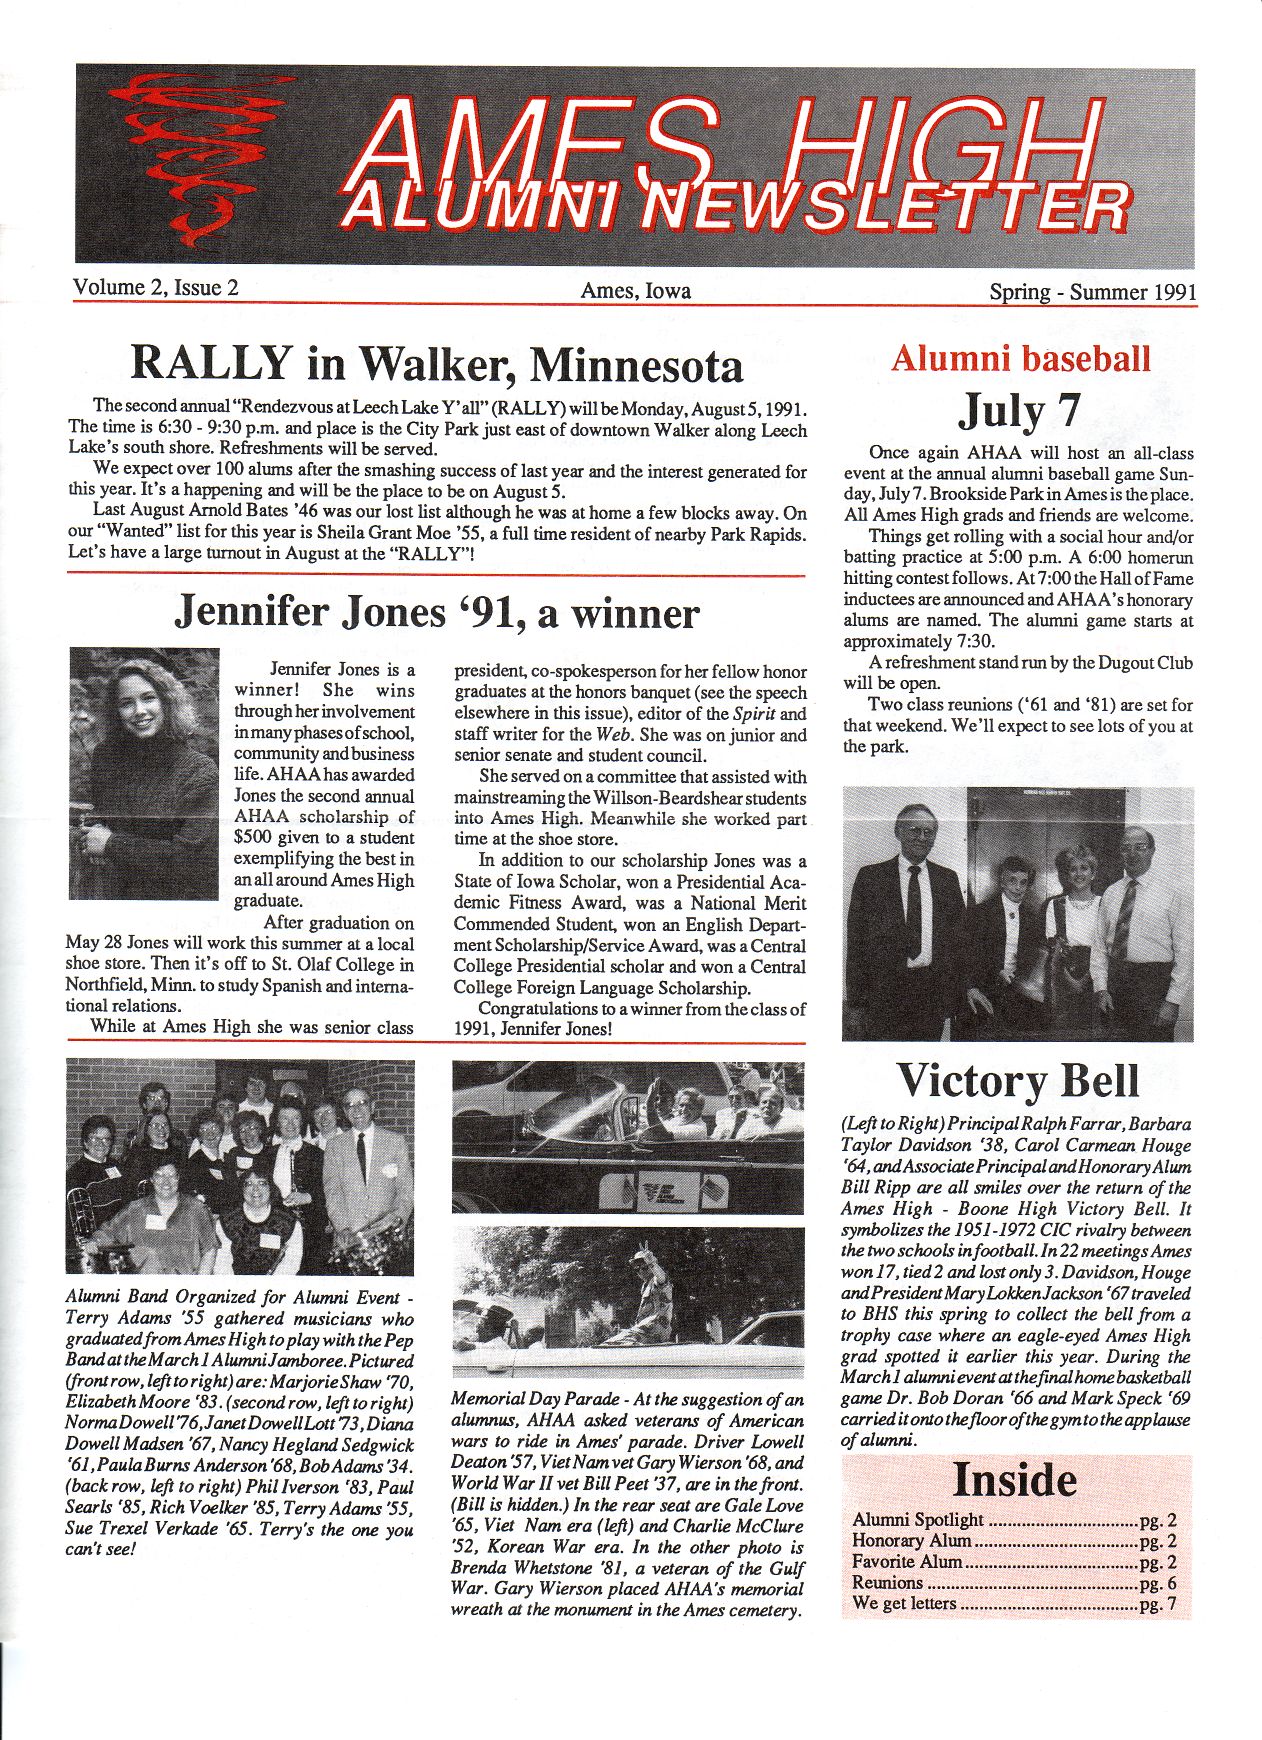 1991 page 1 Ames High School Alumni Assoc. spring-summer newsletter volume 2 issue 2